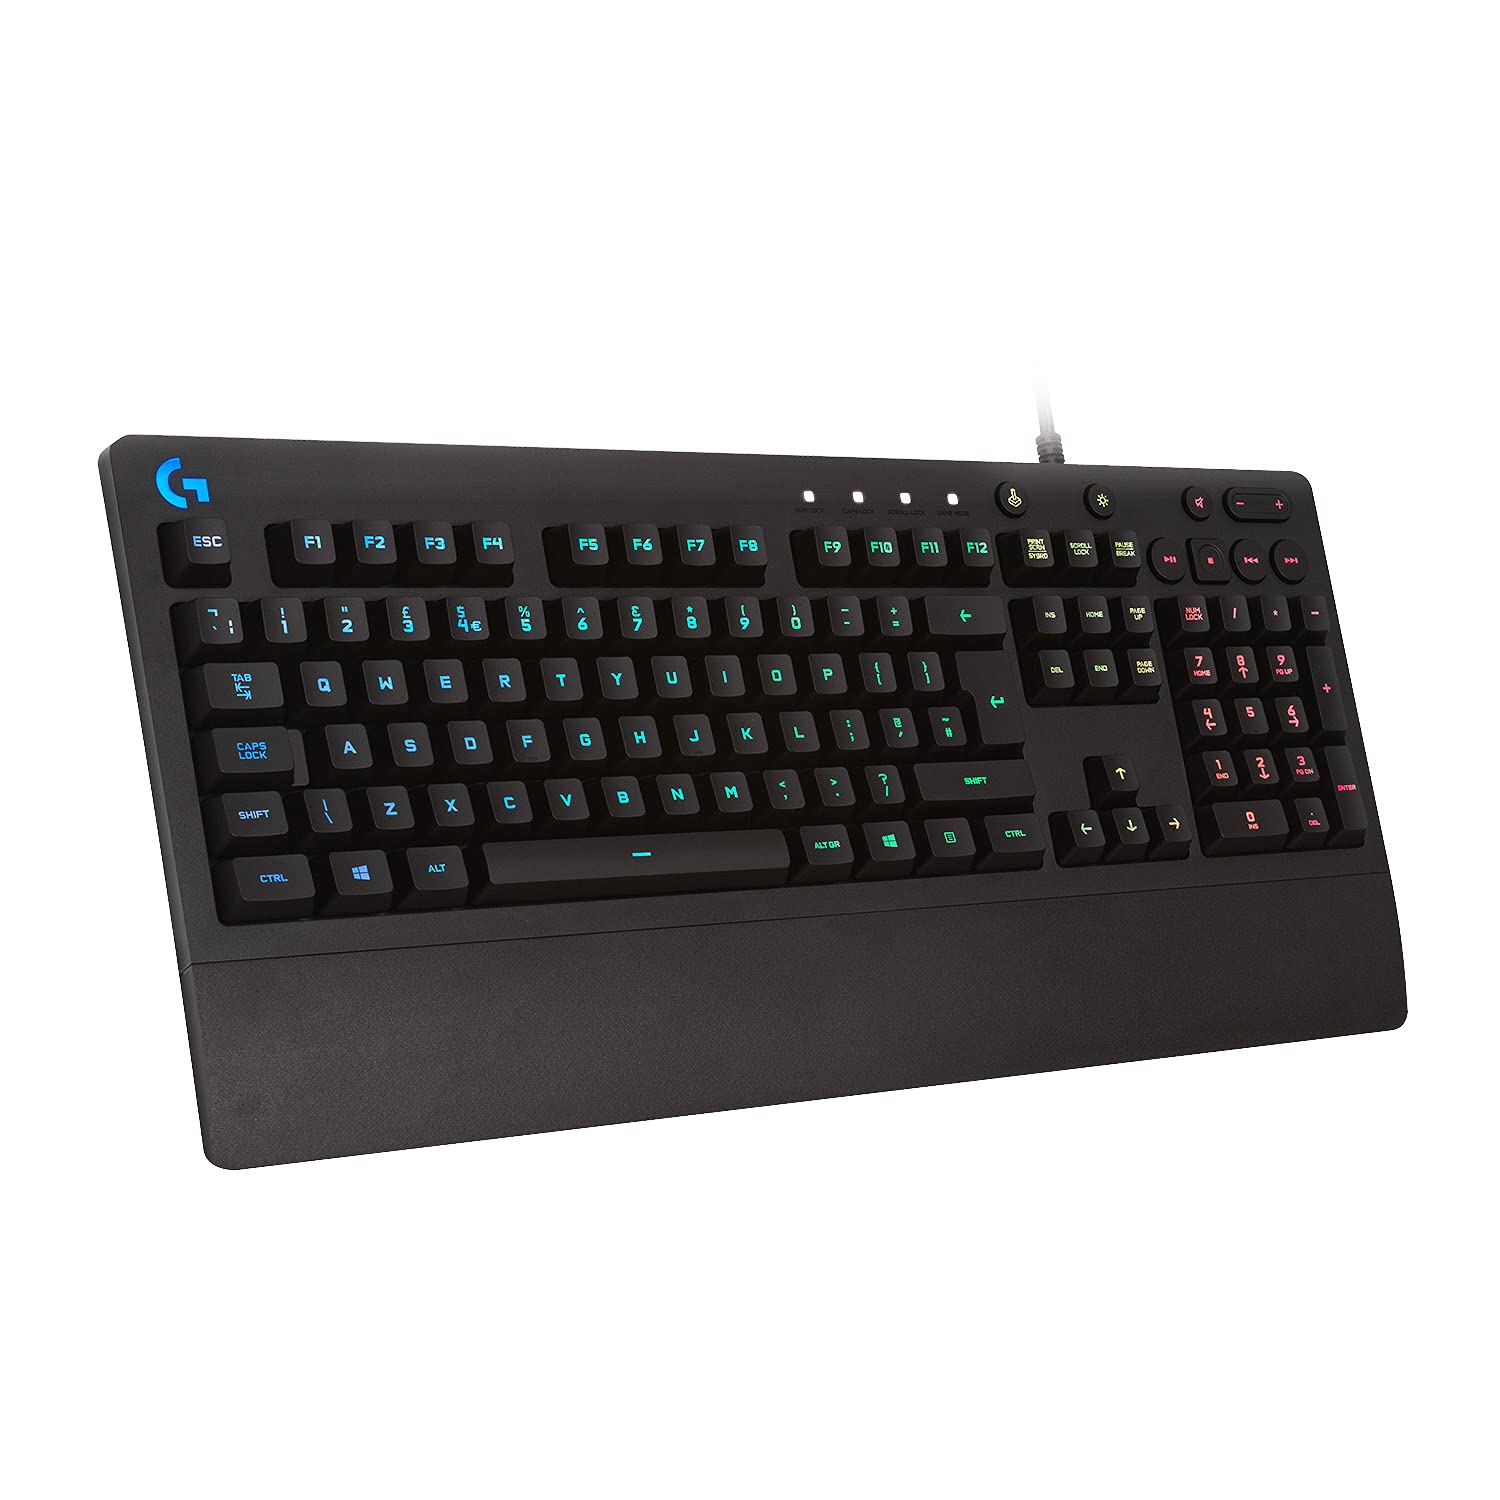 Logitech G213 Prodigy Gaming Keyboard LIGHTSYNC RGB Backlit Keys Spill-Resistant Customizable Keys Dedicated Multi-Media